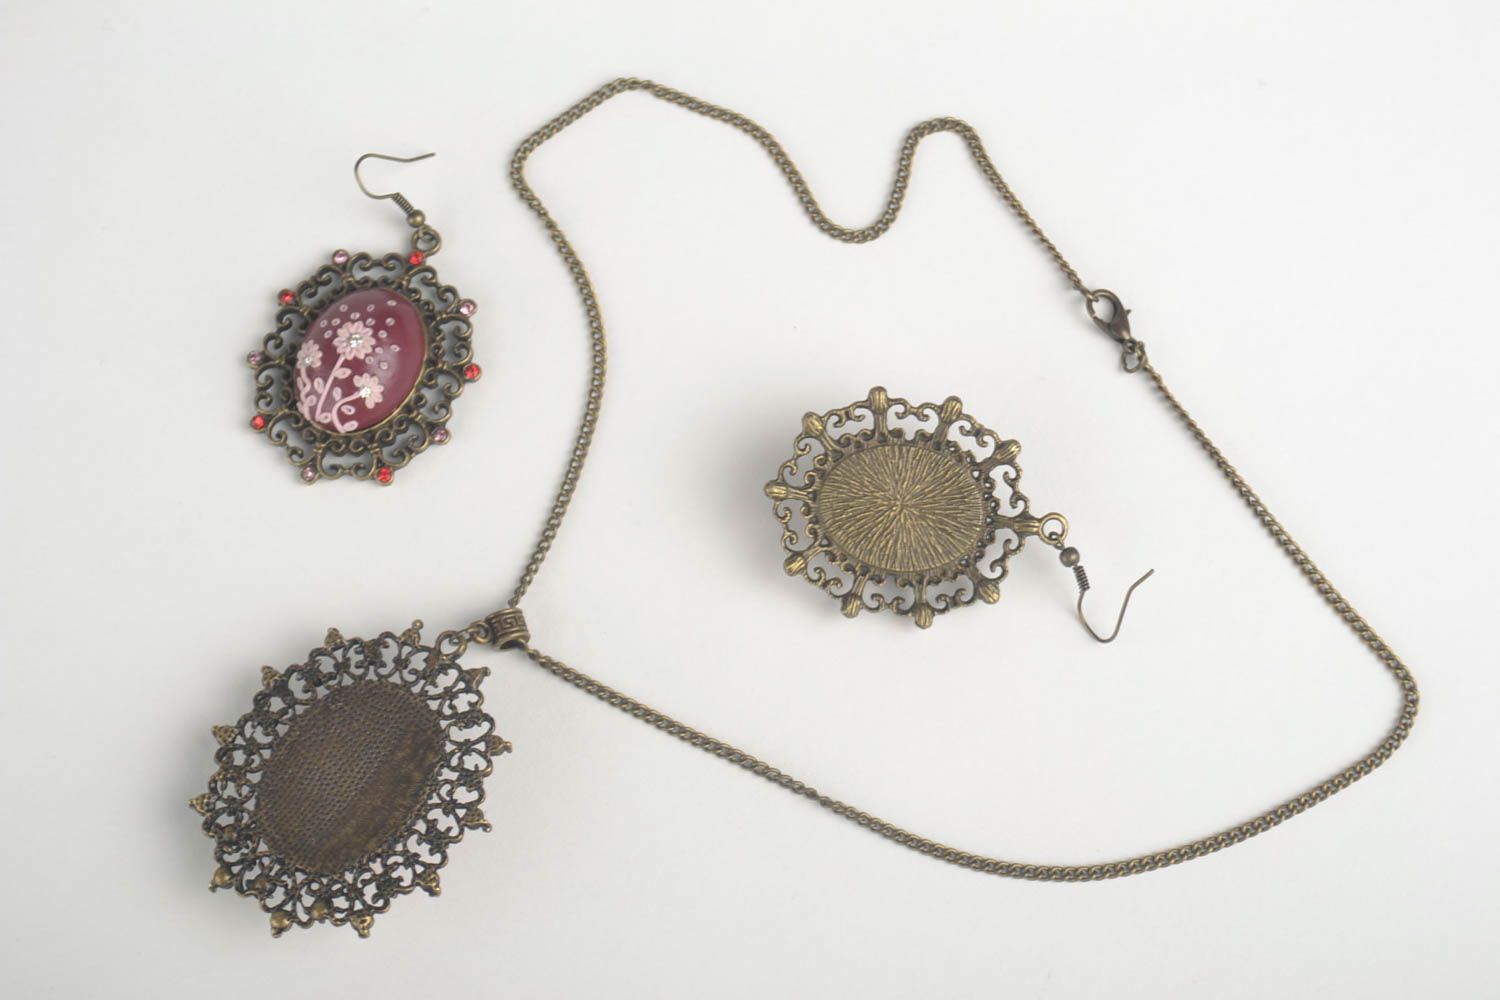 Handmade pendant handmade earrings polymer clay jewelry unusual gift for girl photo 2